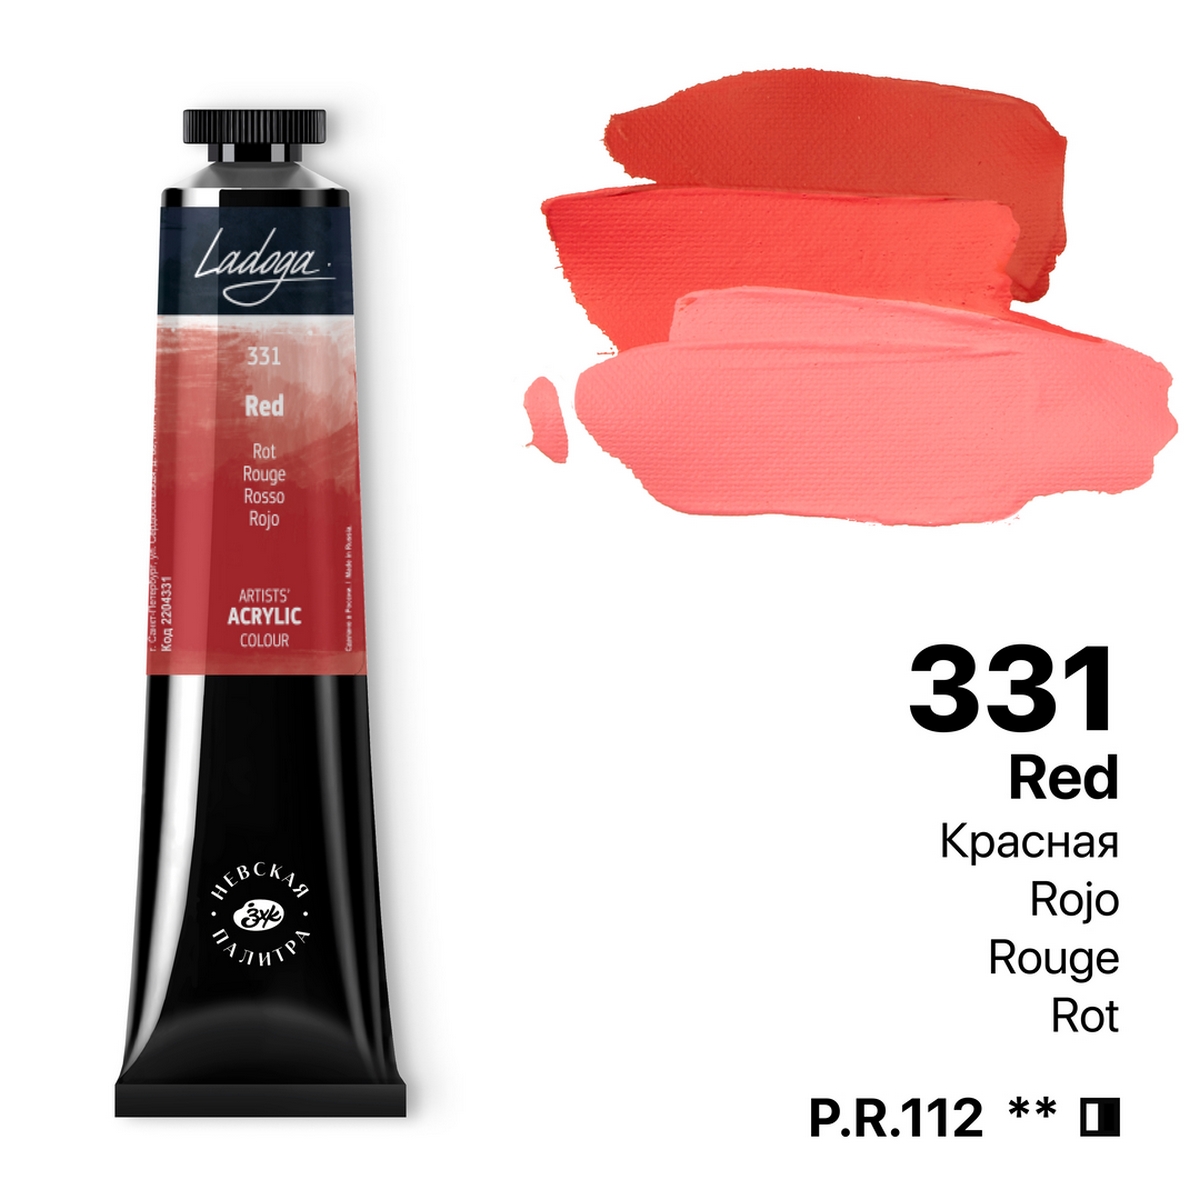 Acrylic colour Ladoga, Red, № 331